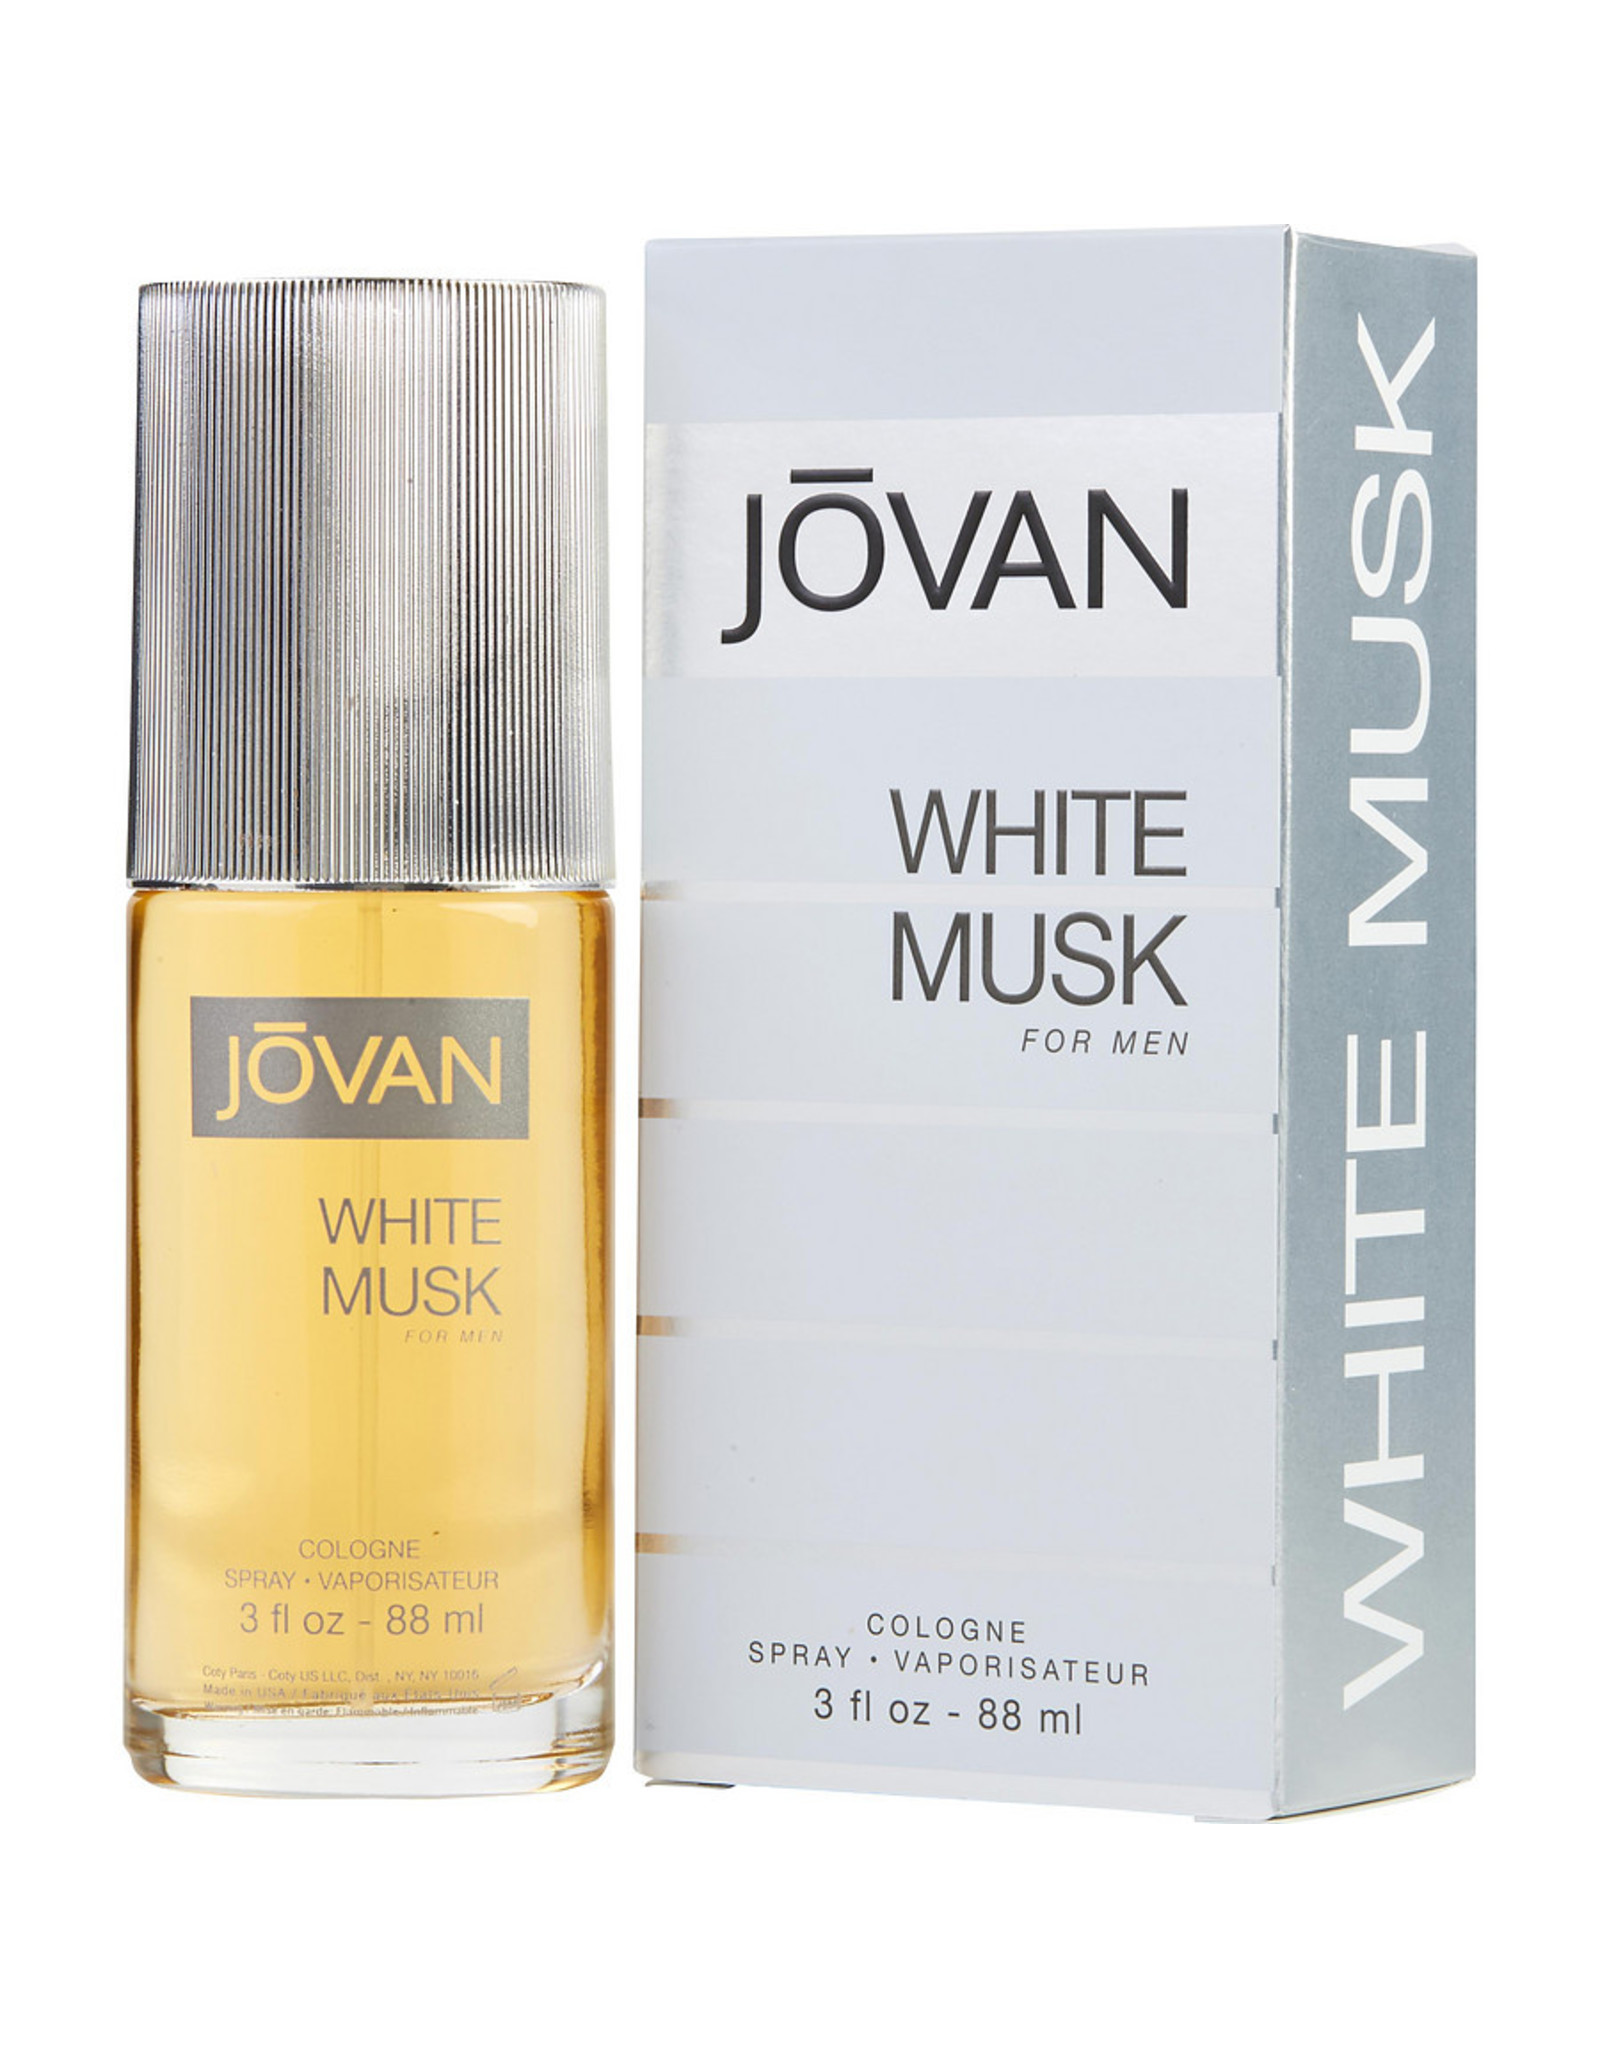 JOVAN JOVAN WHITE MUSK FOR MEN